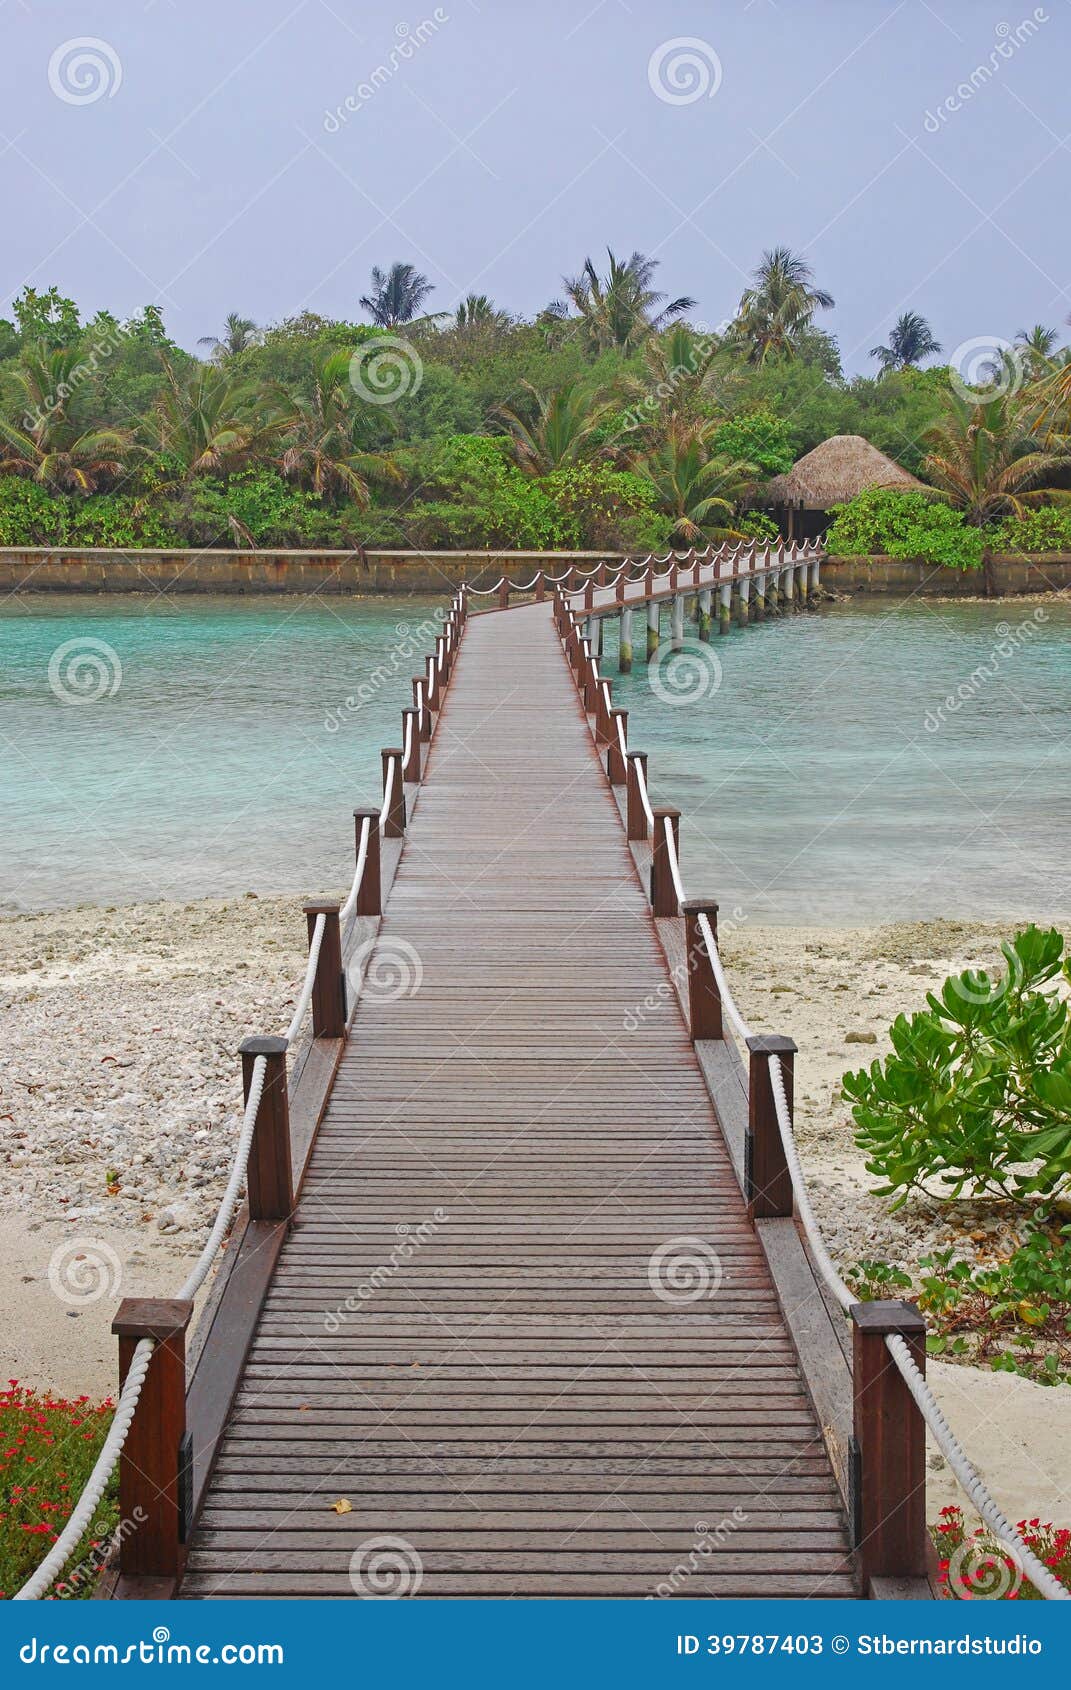 wooden bridge walkway to a greener world